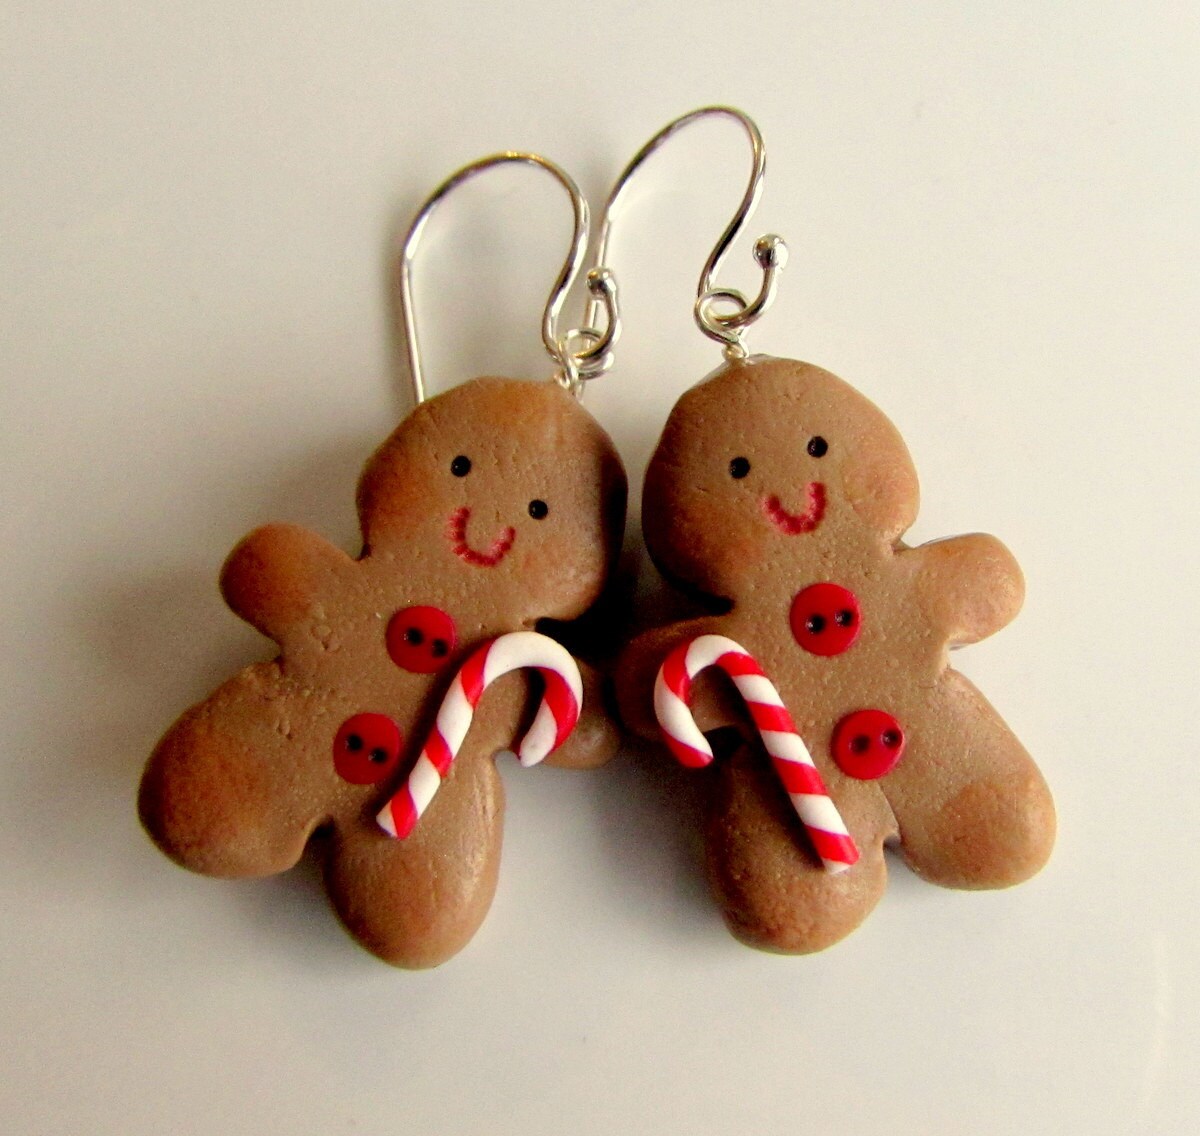 Gingerbread man earrings